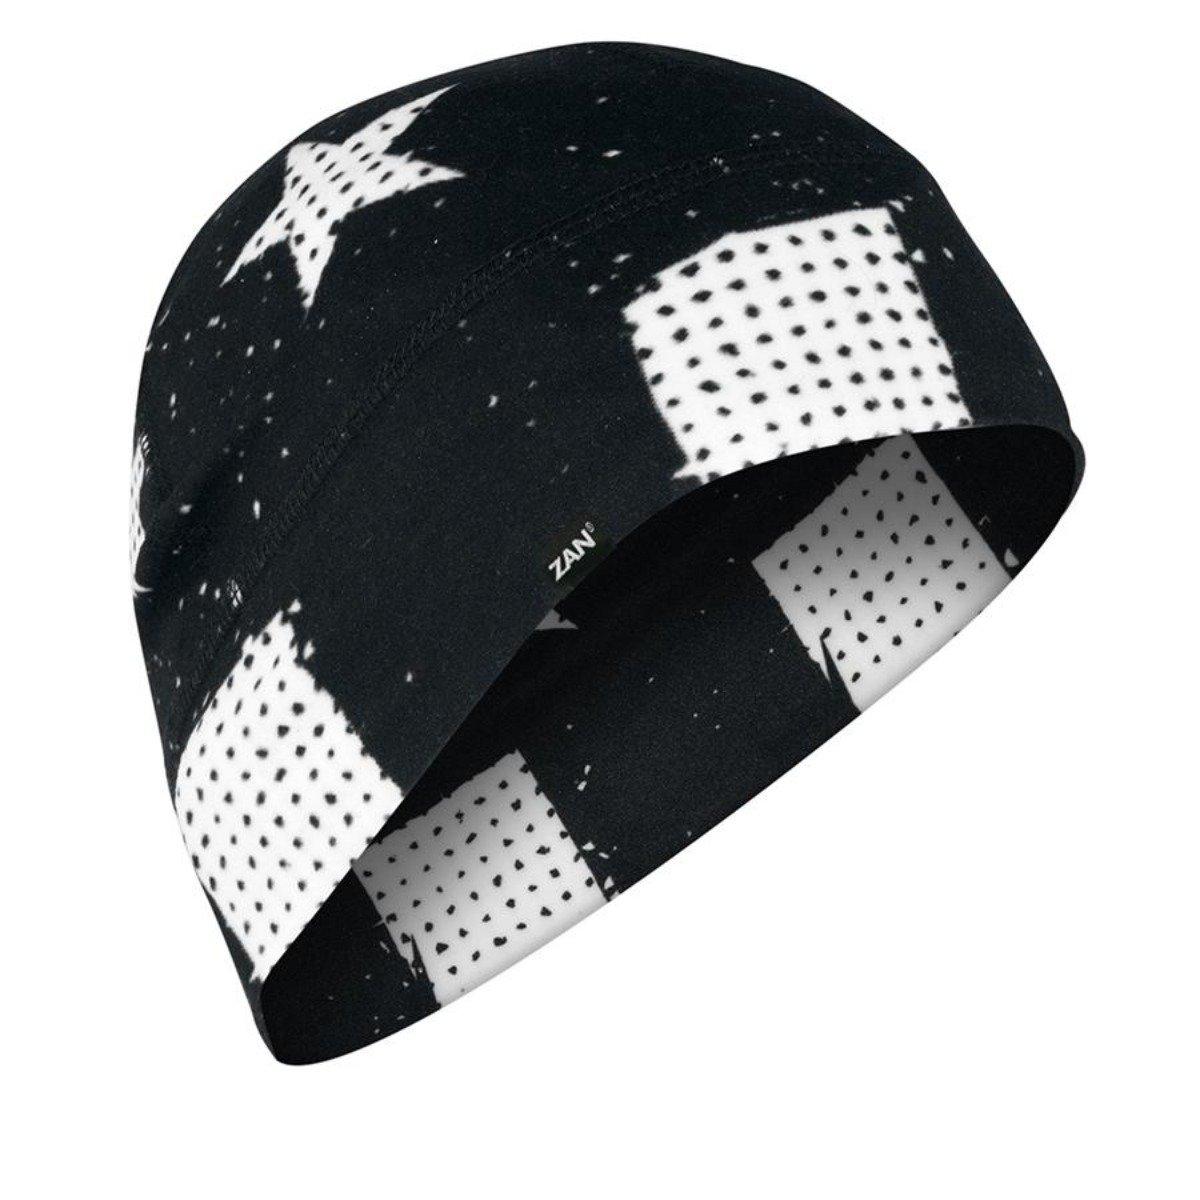 Zan headgear® Beanie, Black & White Flag - American Legend Rider